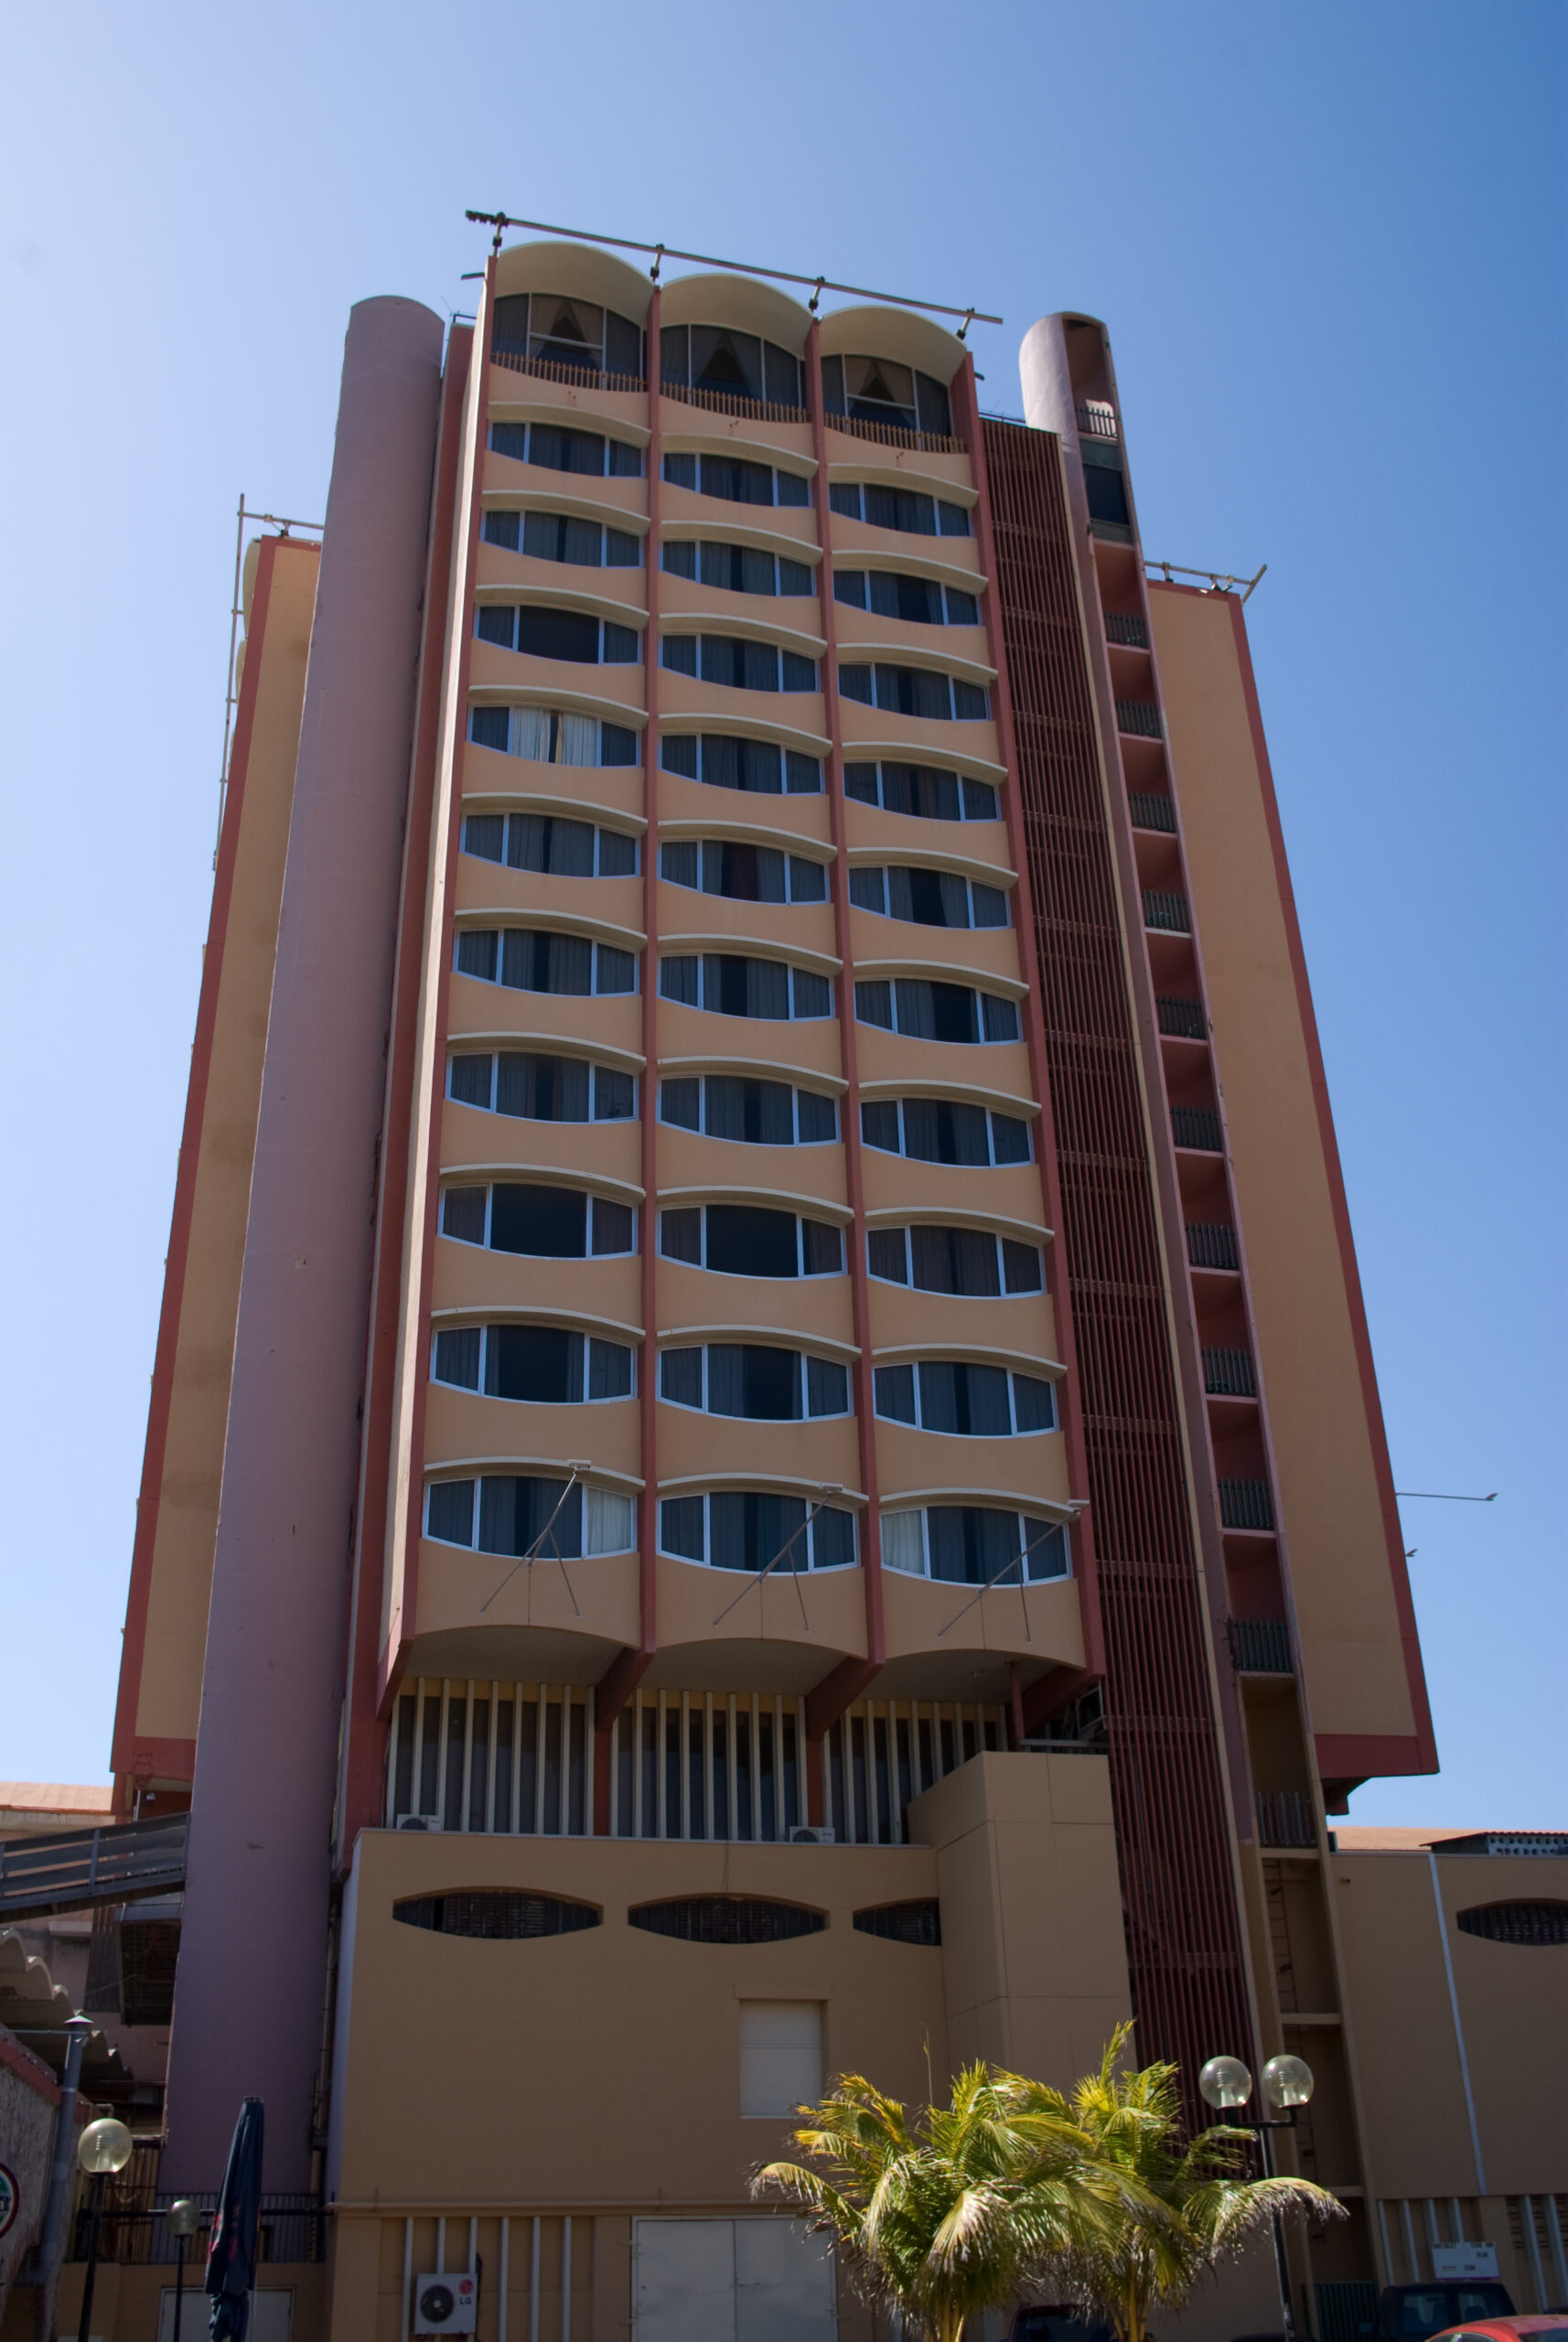 Tallest building of Curaçao